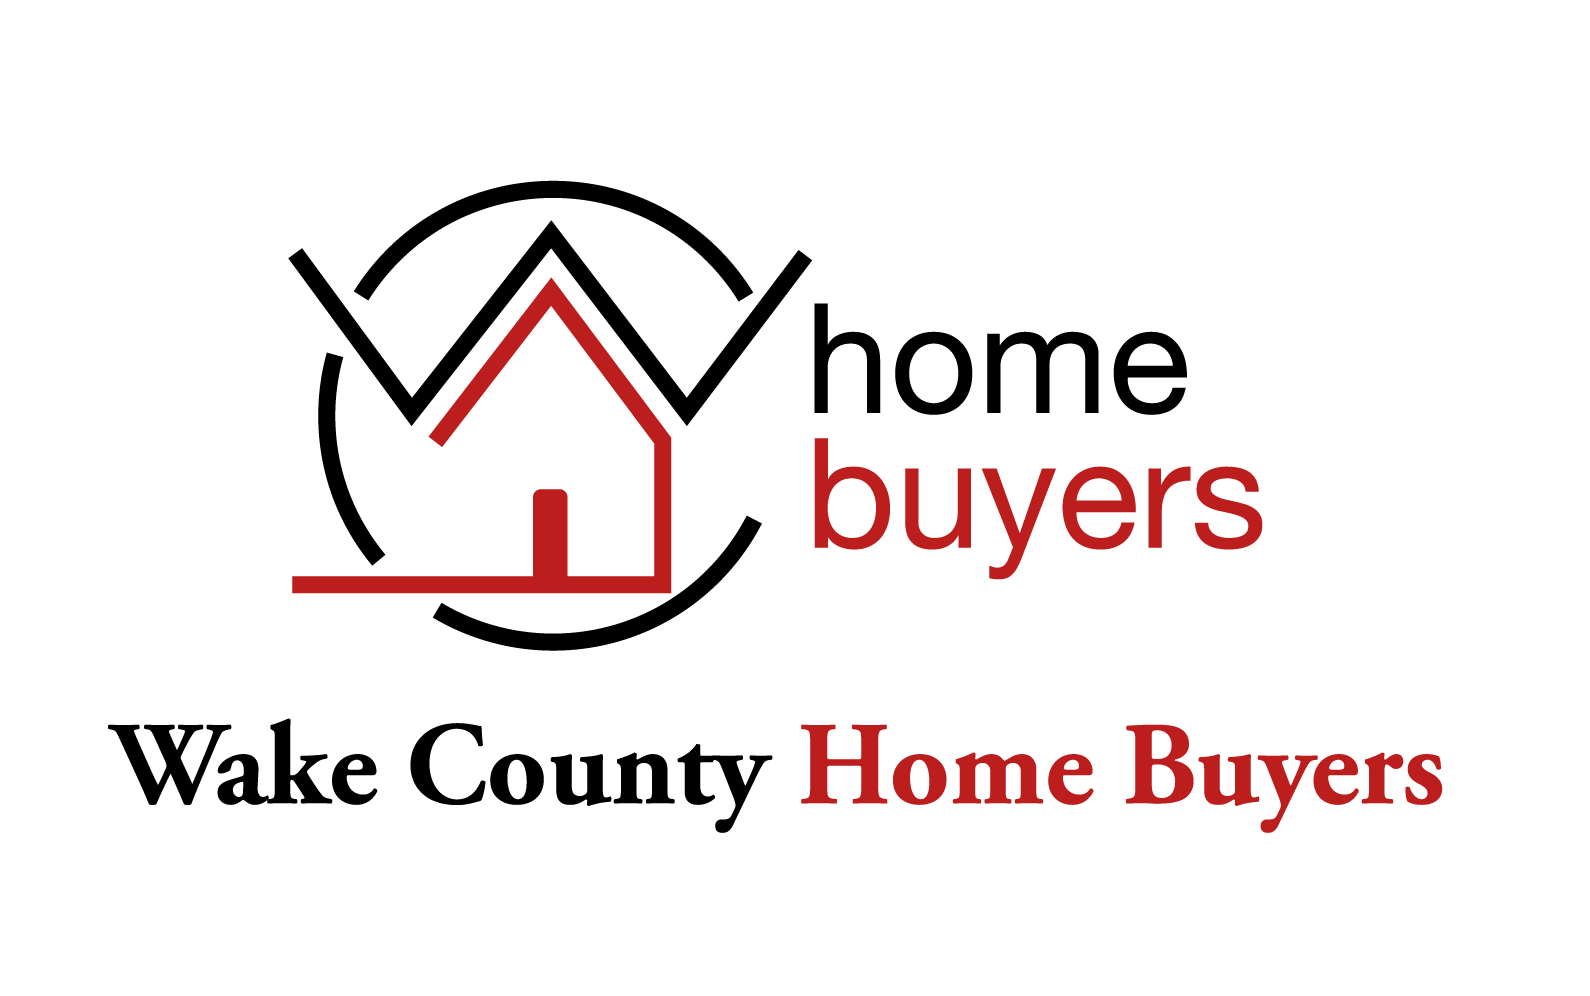 Wake County Home Buyers logo